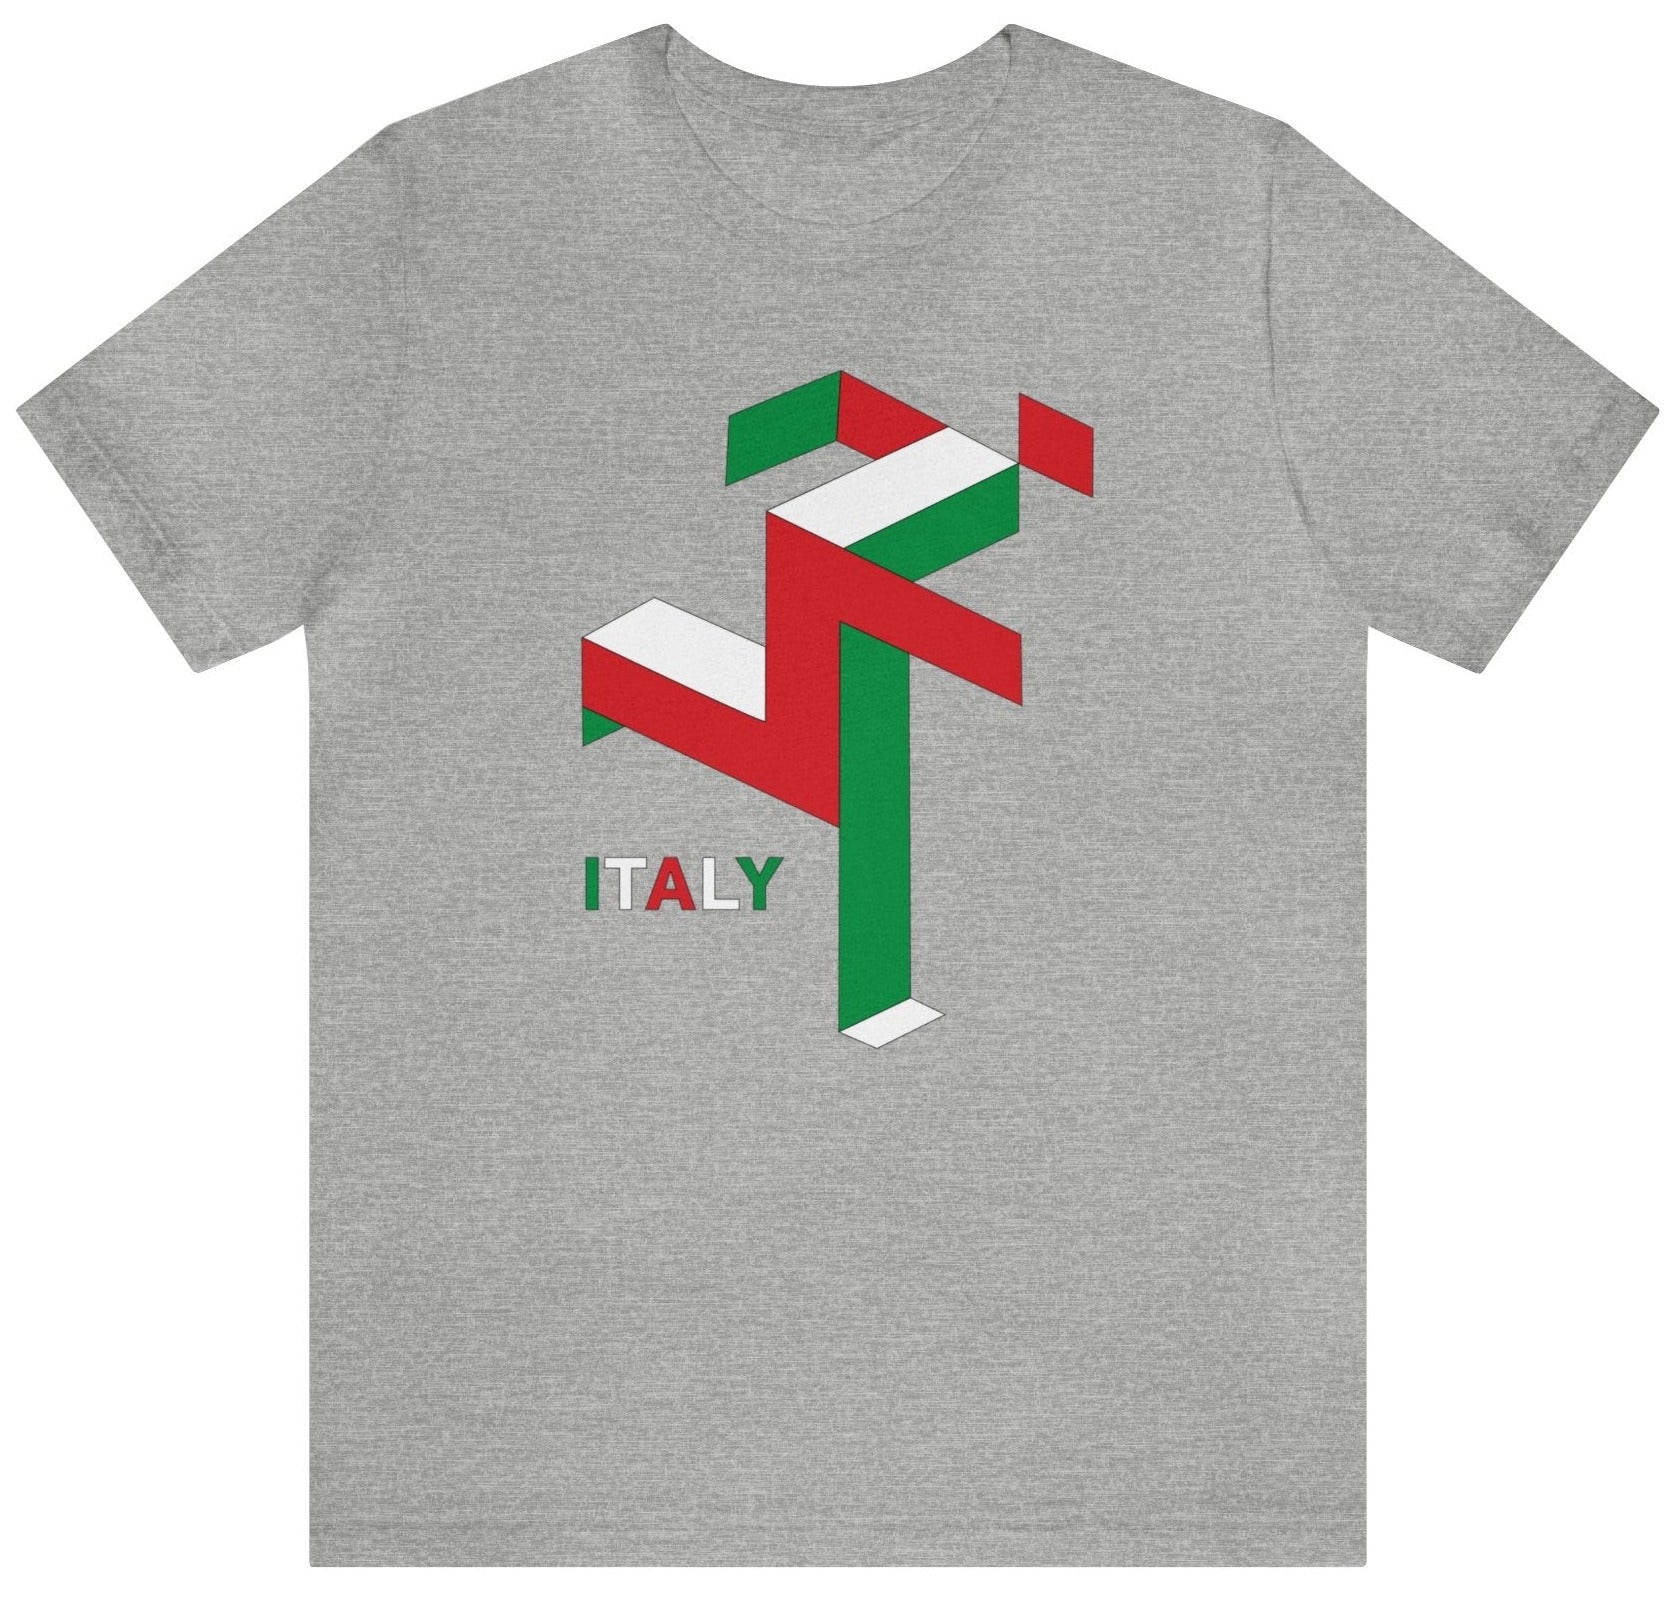 Italy runner Olympics t shirt